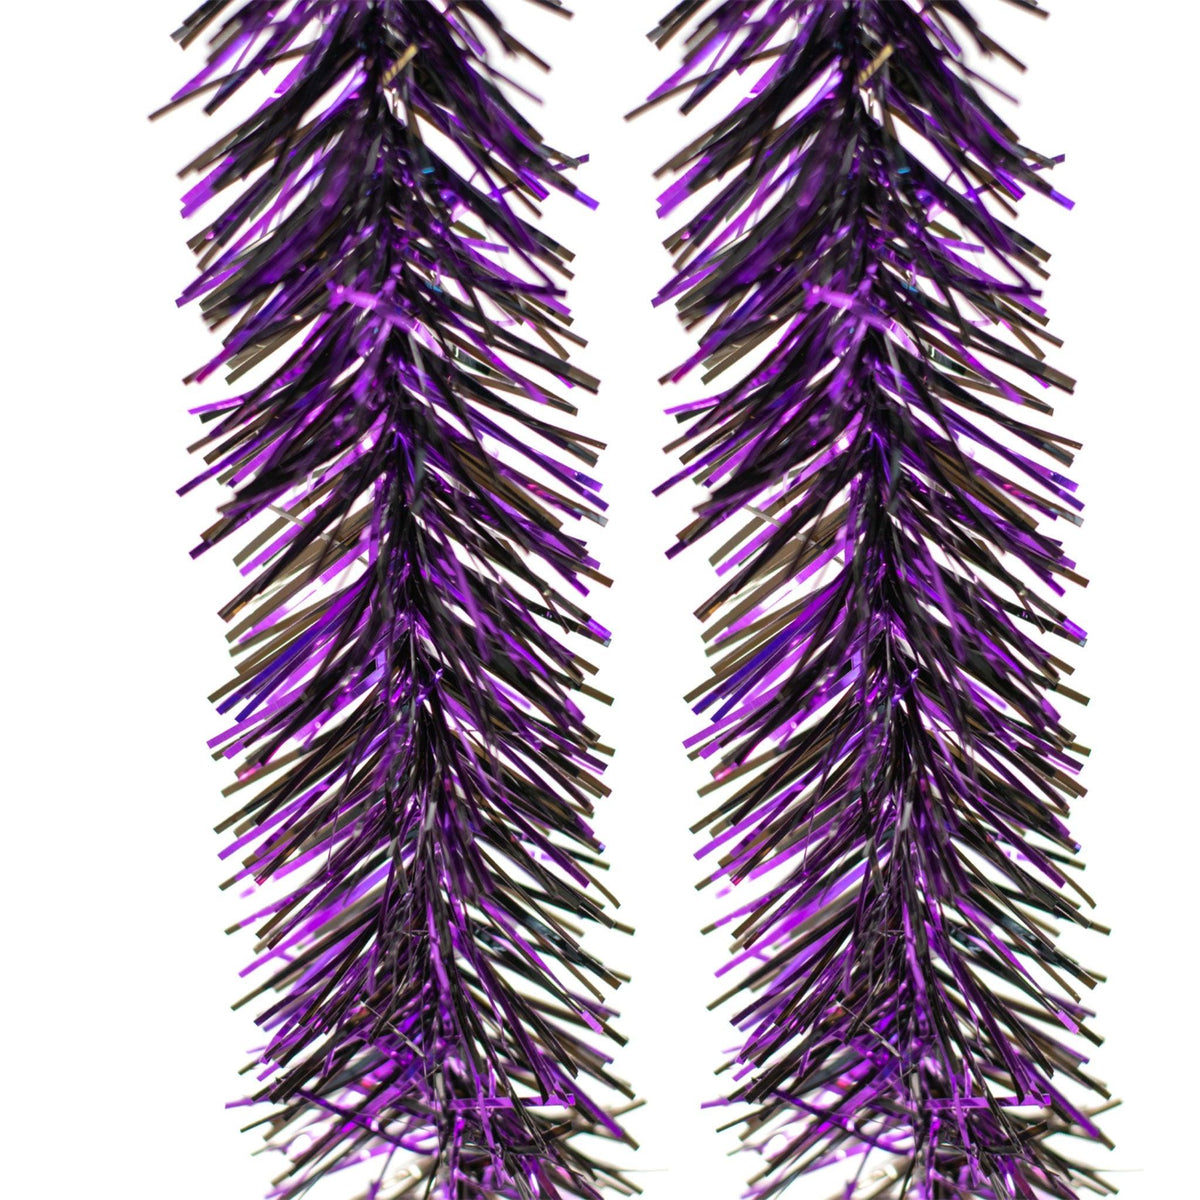 Lee Display's brand new 25FT Metallic Purple and Black Tinsel Garlands and Fringe Embellishments on sale at leedisplay.com